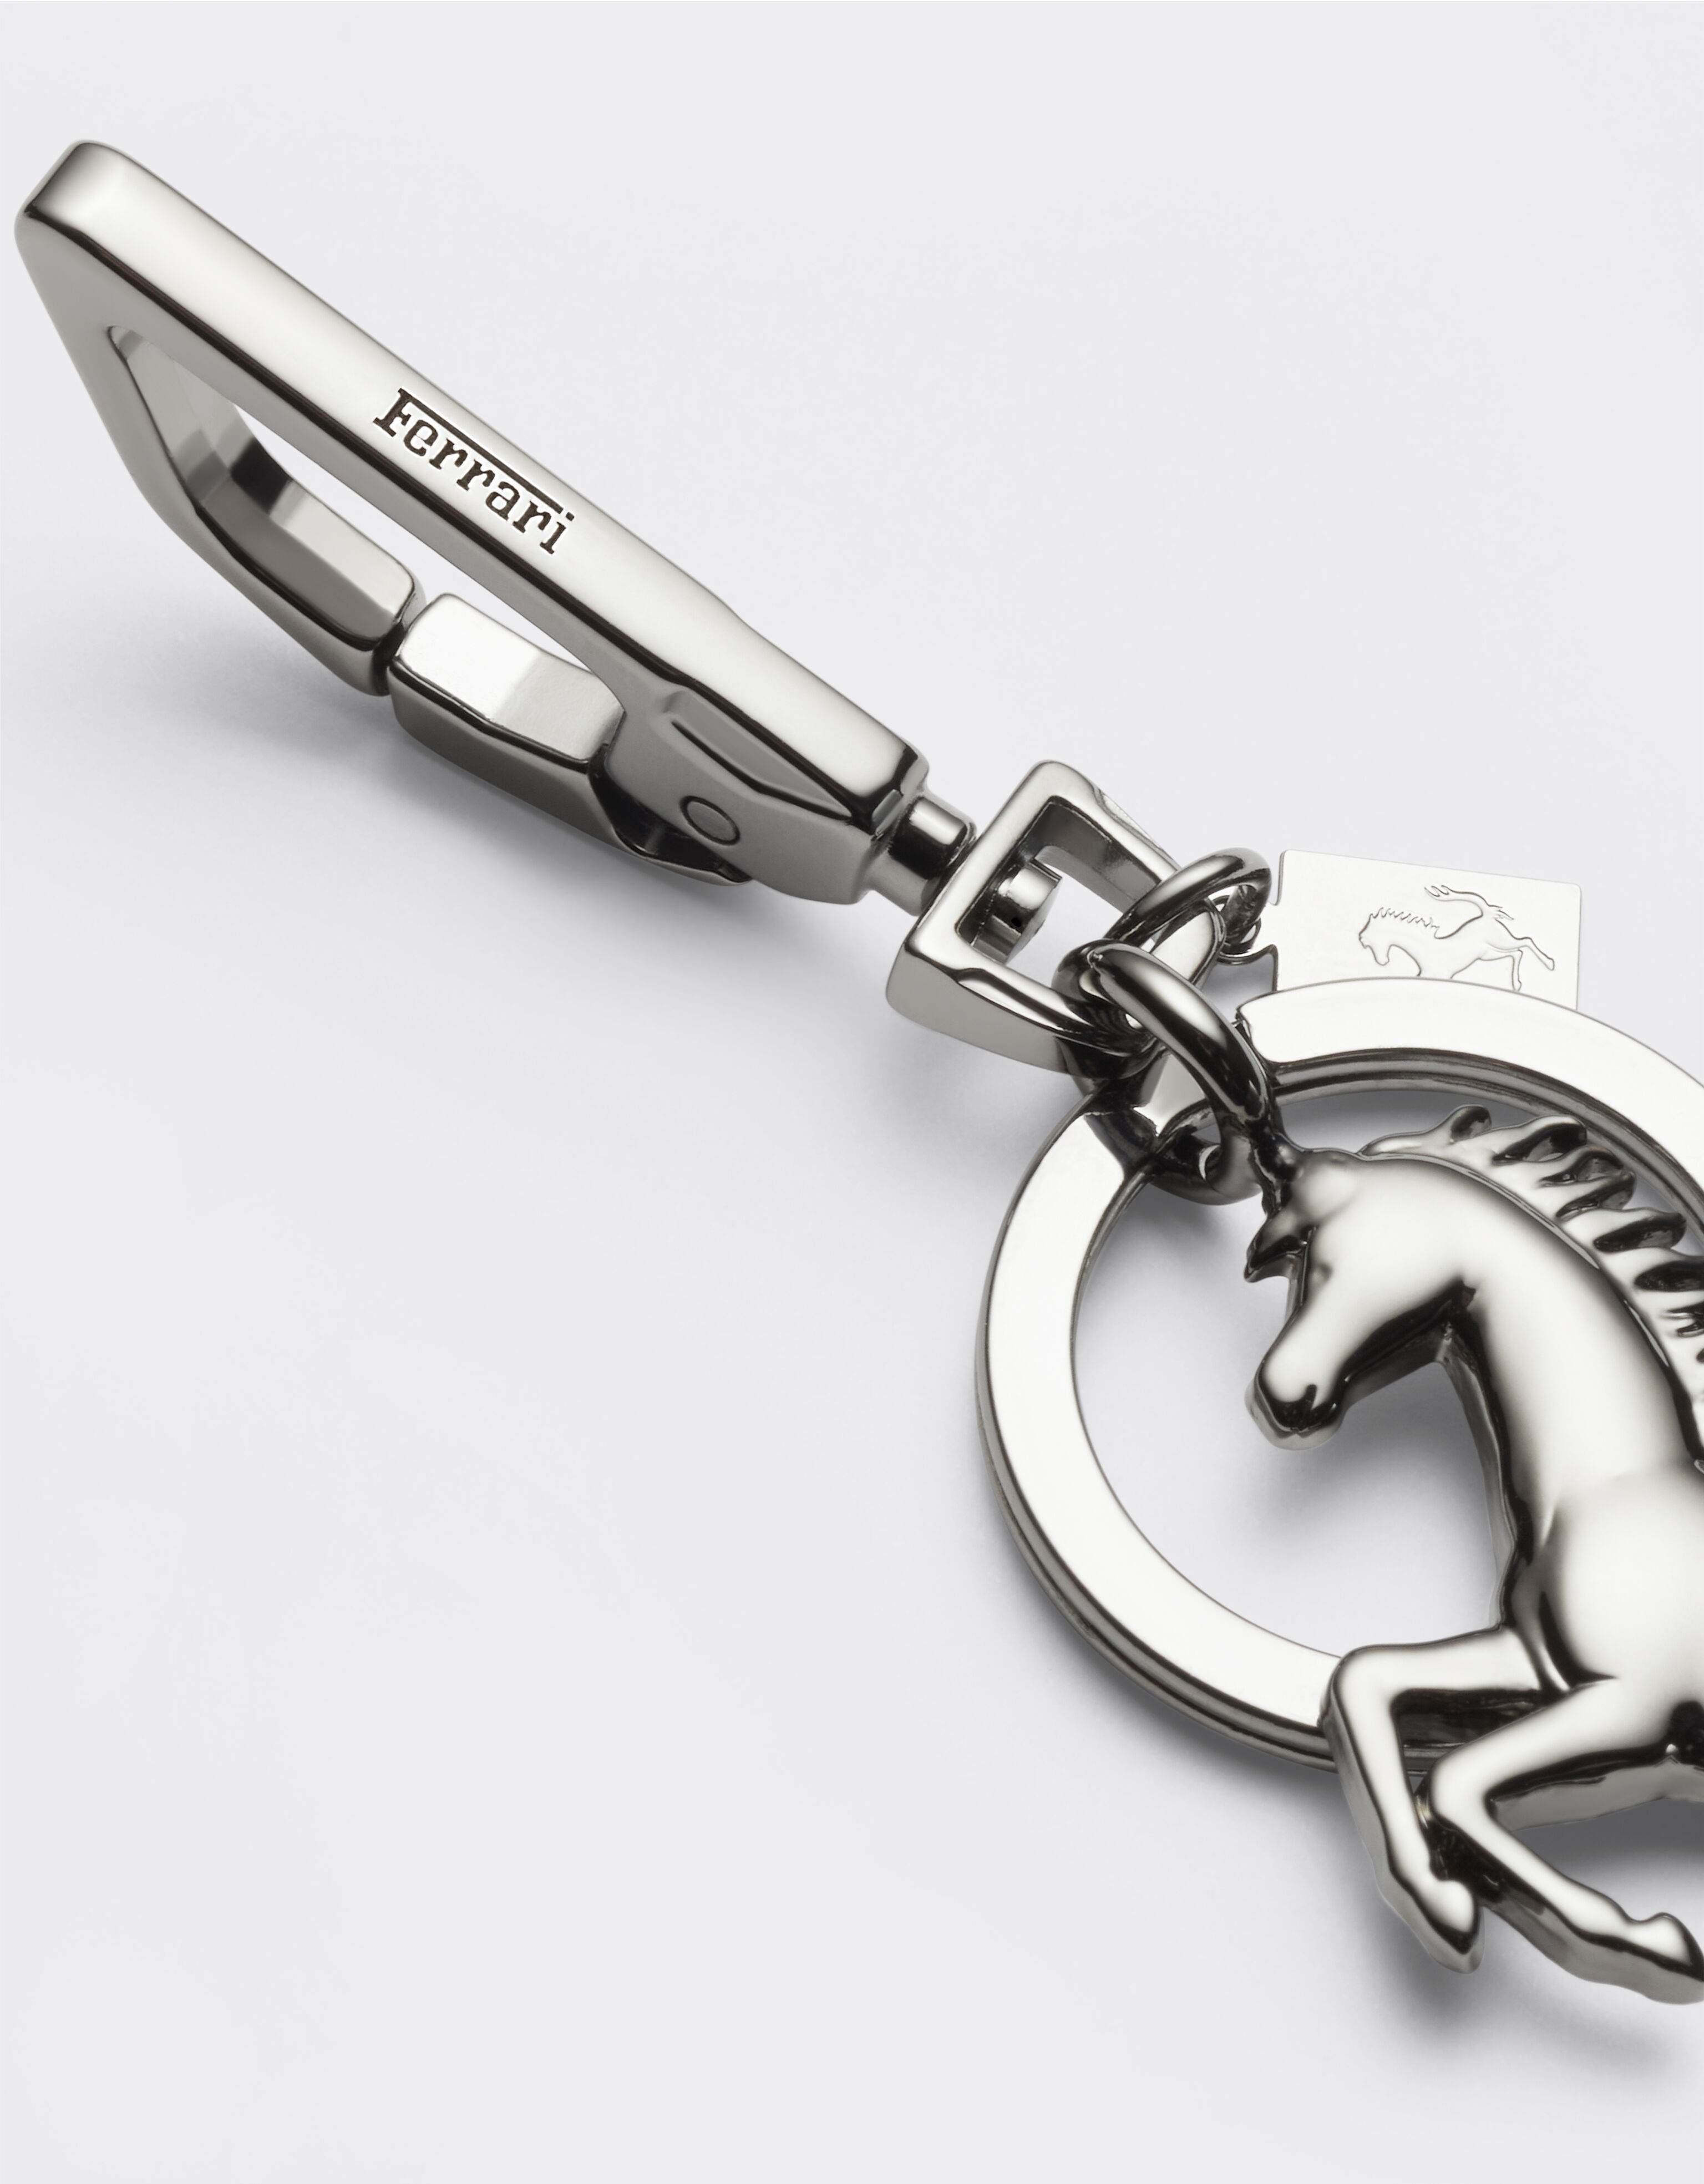 Ferrari Prancing Horse keychain and charm Charcoal 20057f